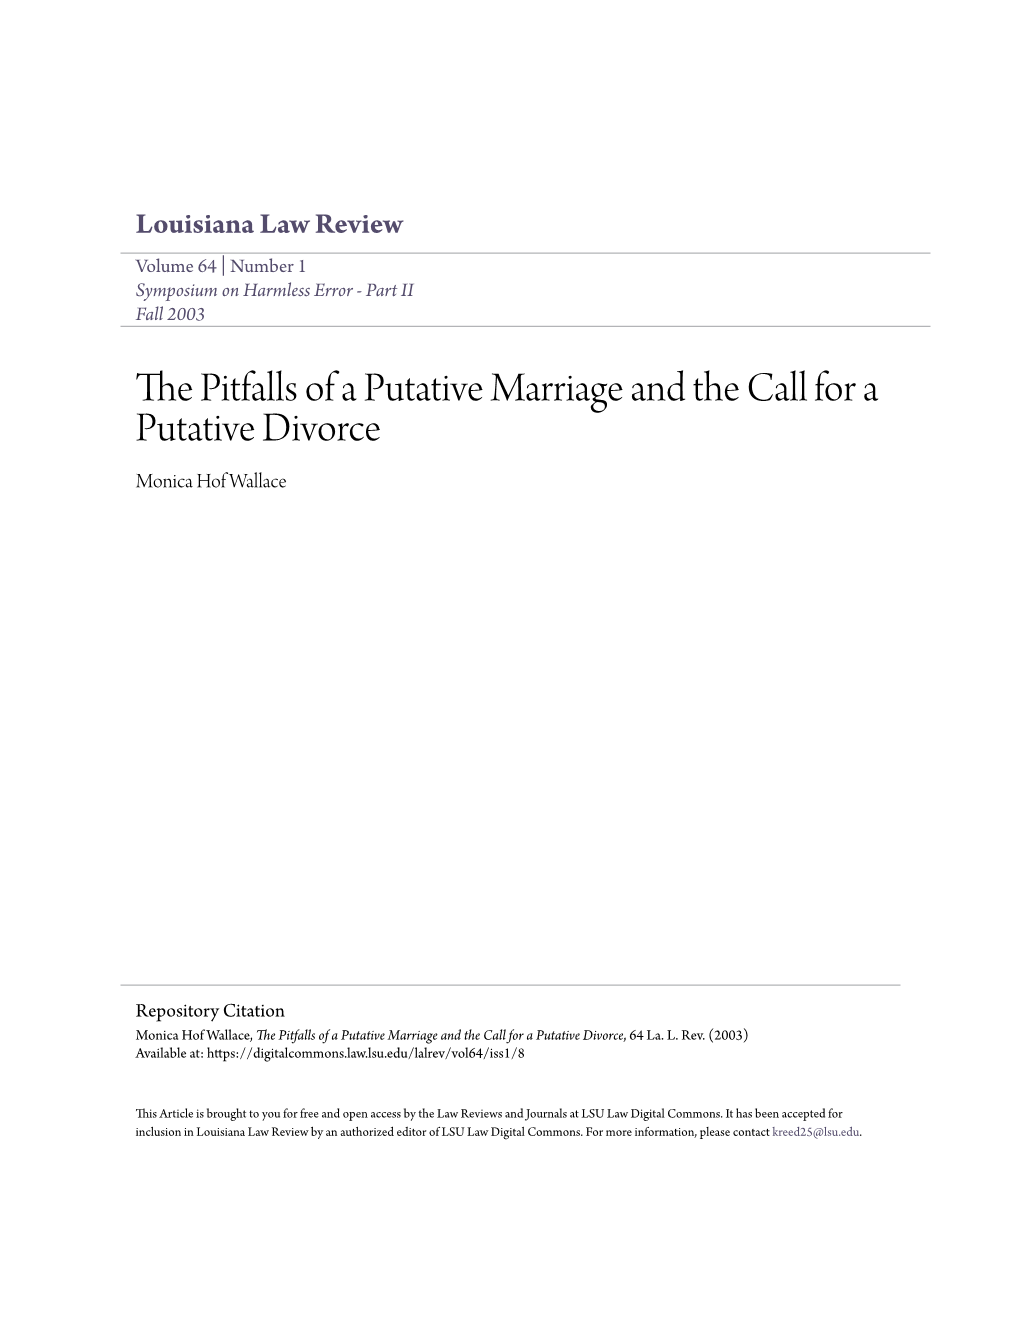 The Pitfalls of a Putative Marriage and the Call for a Putative Divorce, 64 La